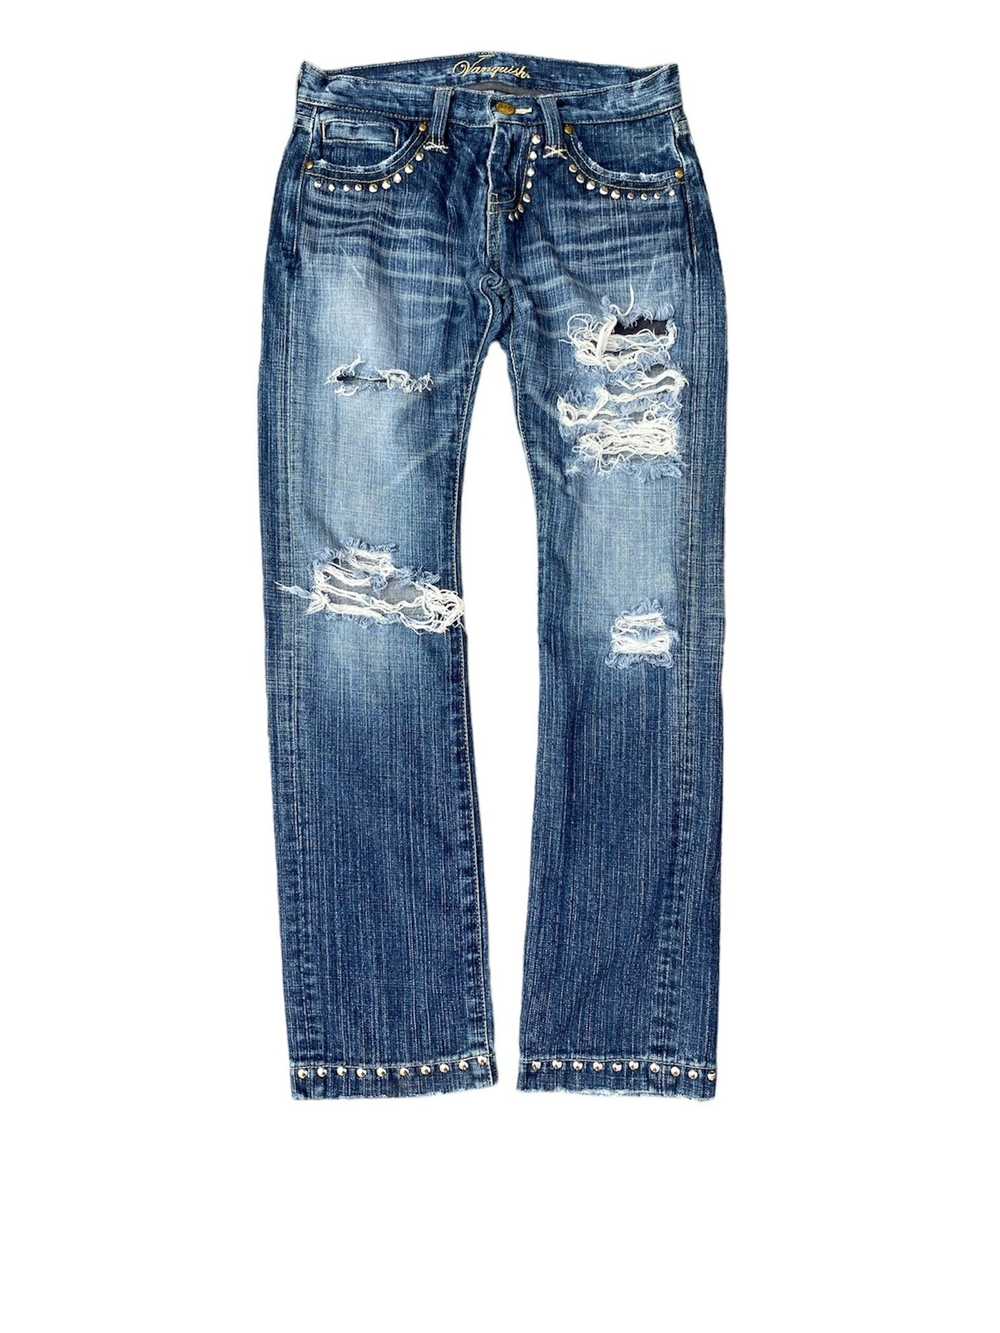 Vanquish Vanquish Gold Distressed Studded Jeans - image 1